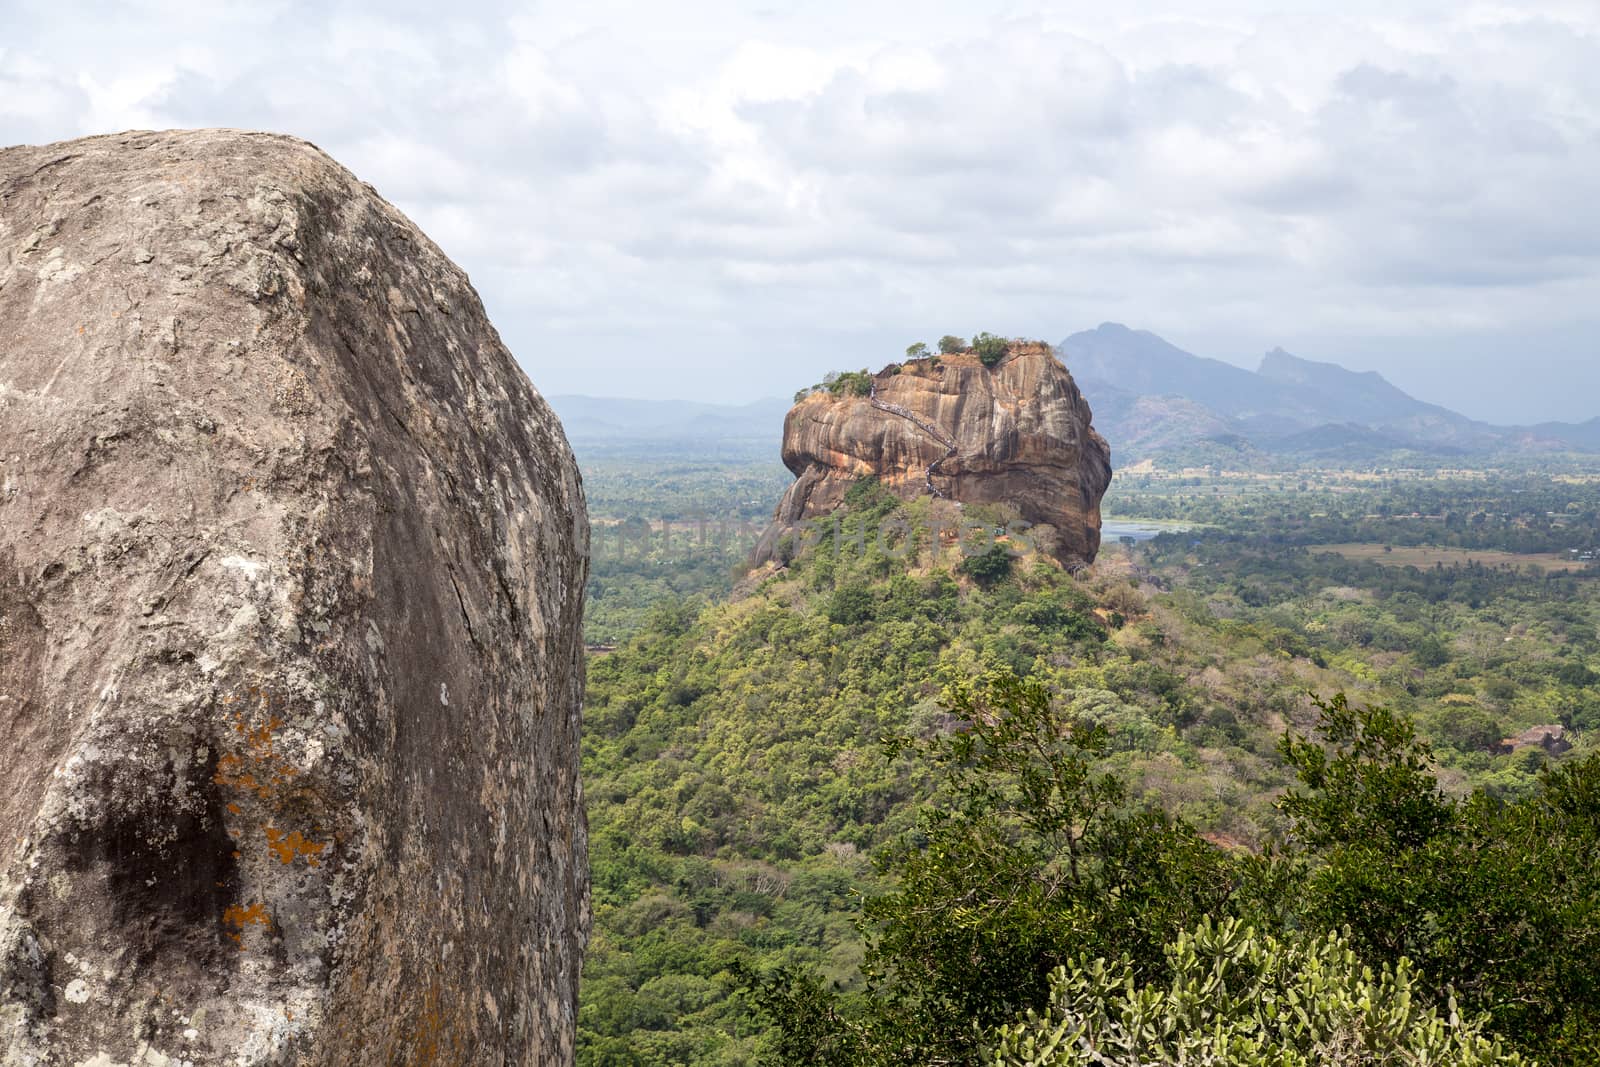 Sigiriya, Sri Lanka - August 17, 2018: The ancient Lion Rock as seen from Pidurangala Rock